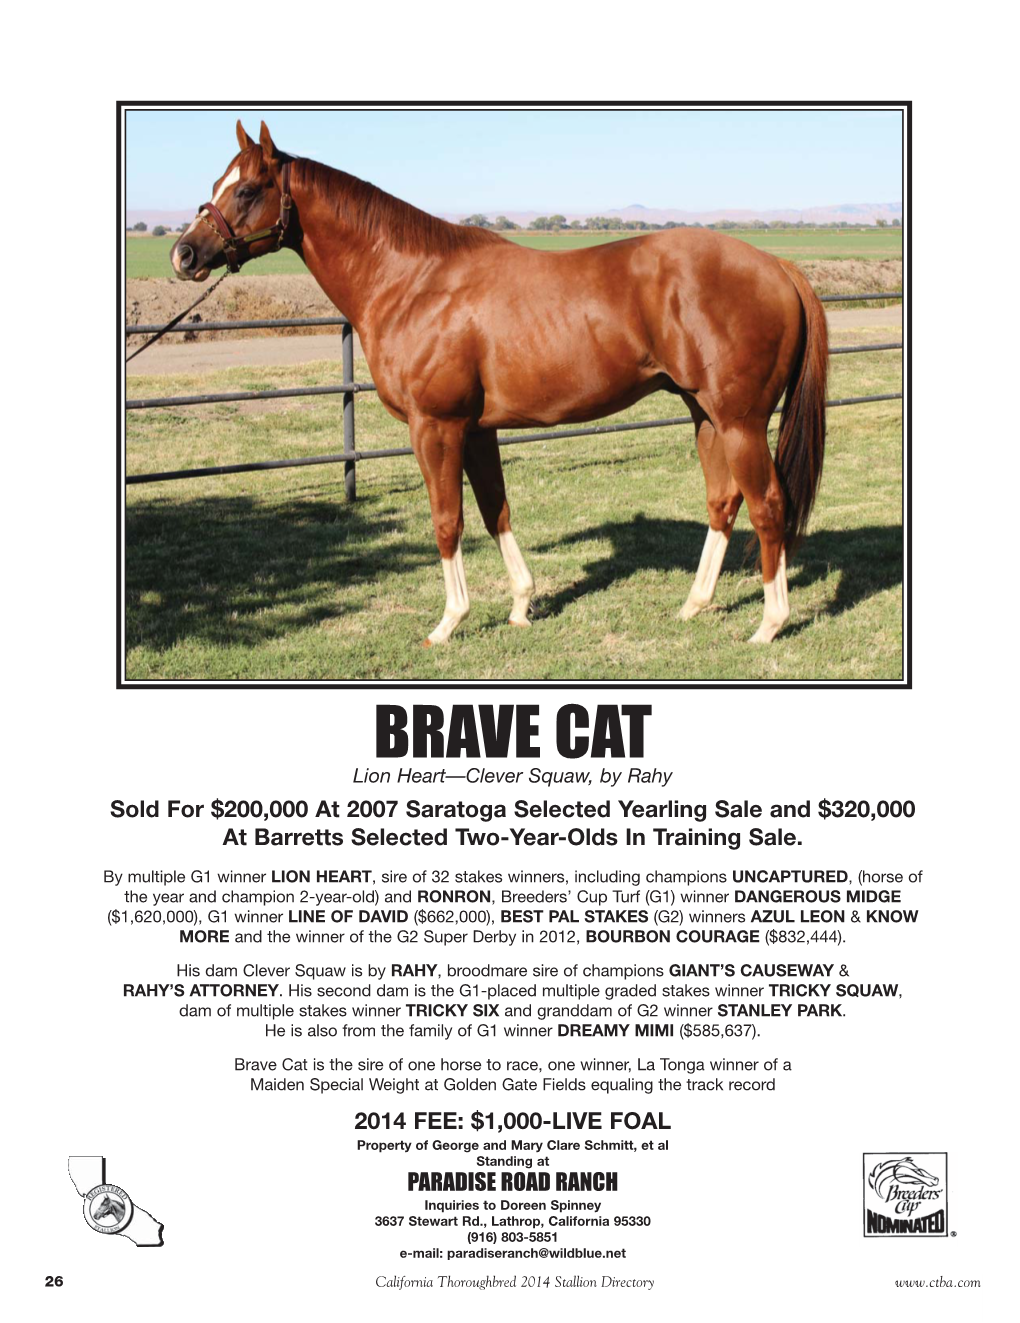 BRAVE CAT:Layout 1 12/2/13 9:03 AM Page 1